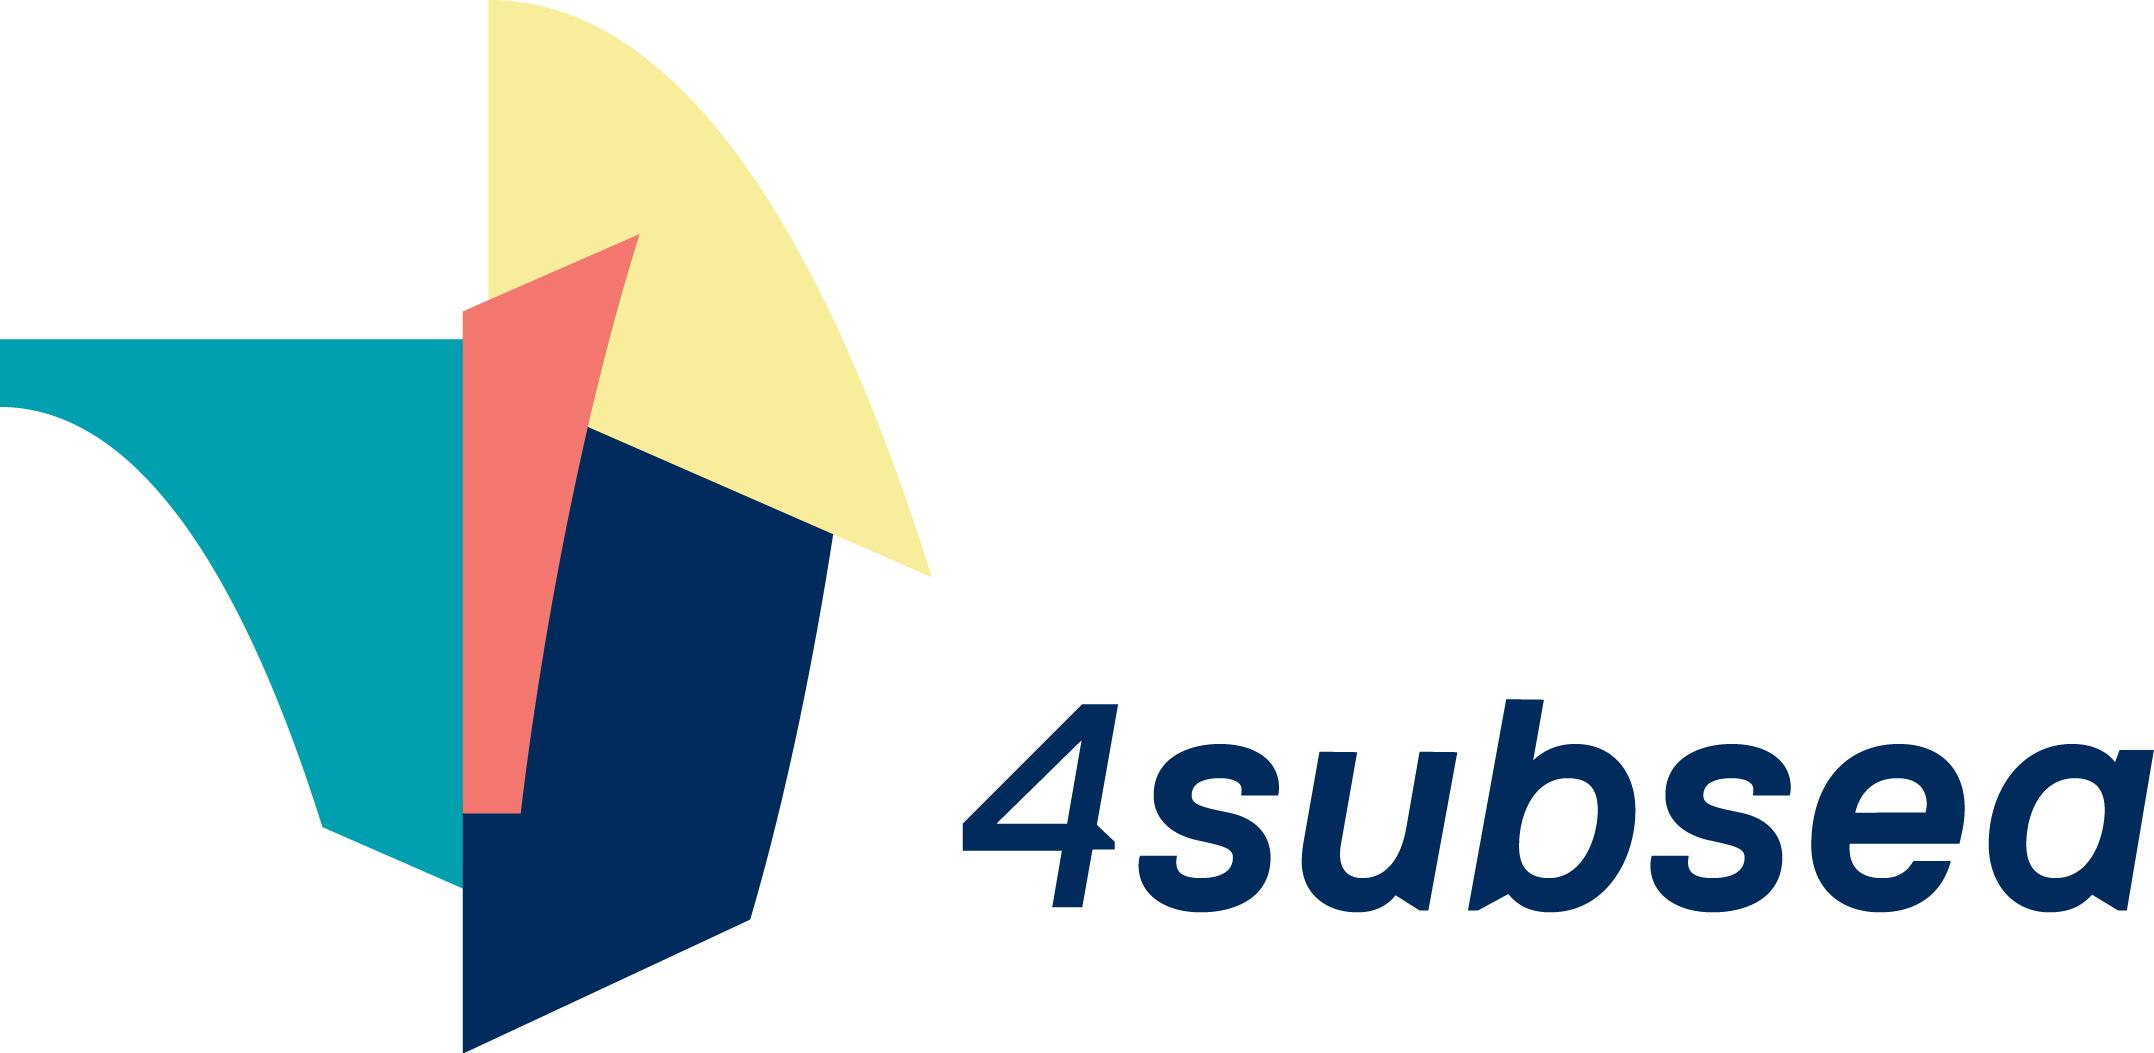 2 4Subsea logo jpg format